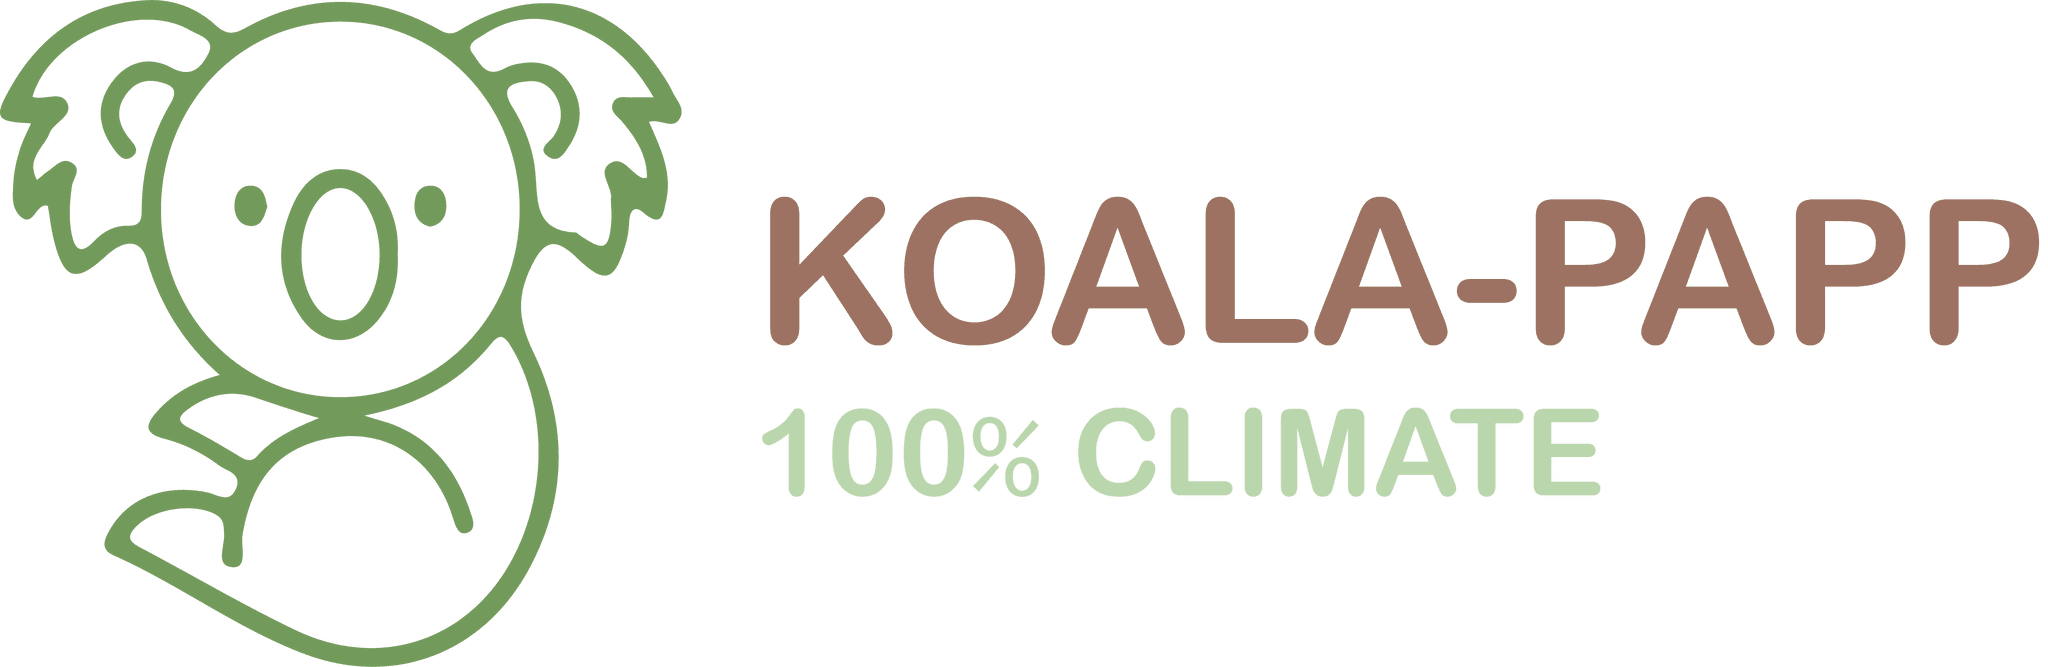 Koala-Papp logo